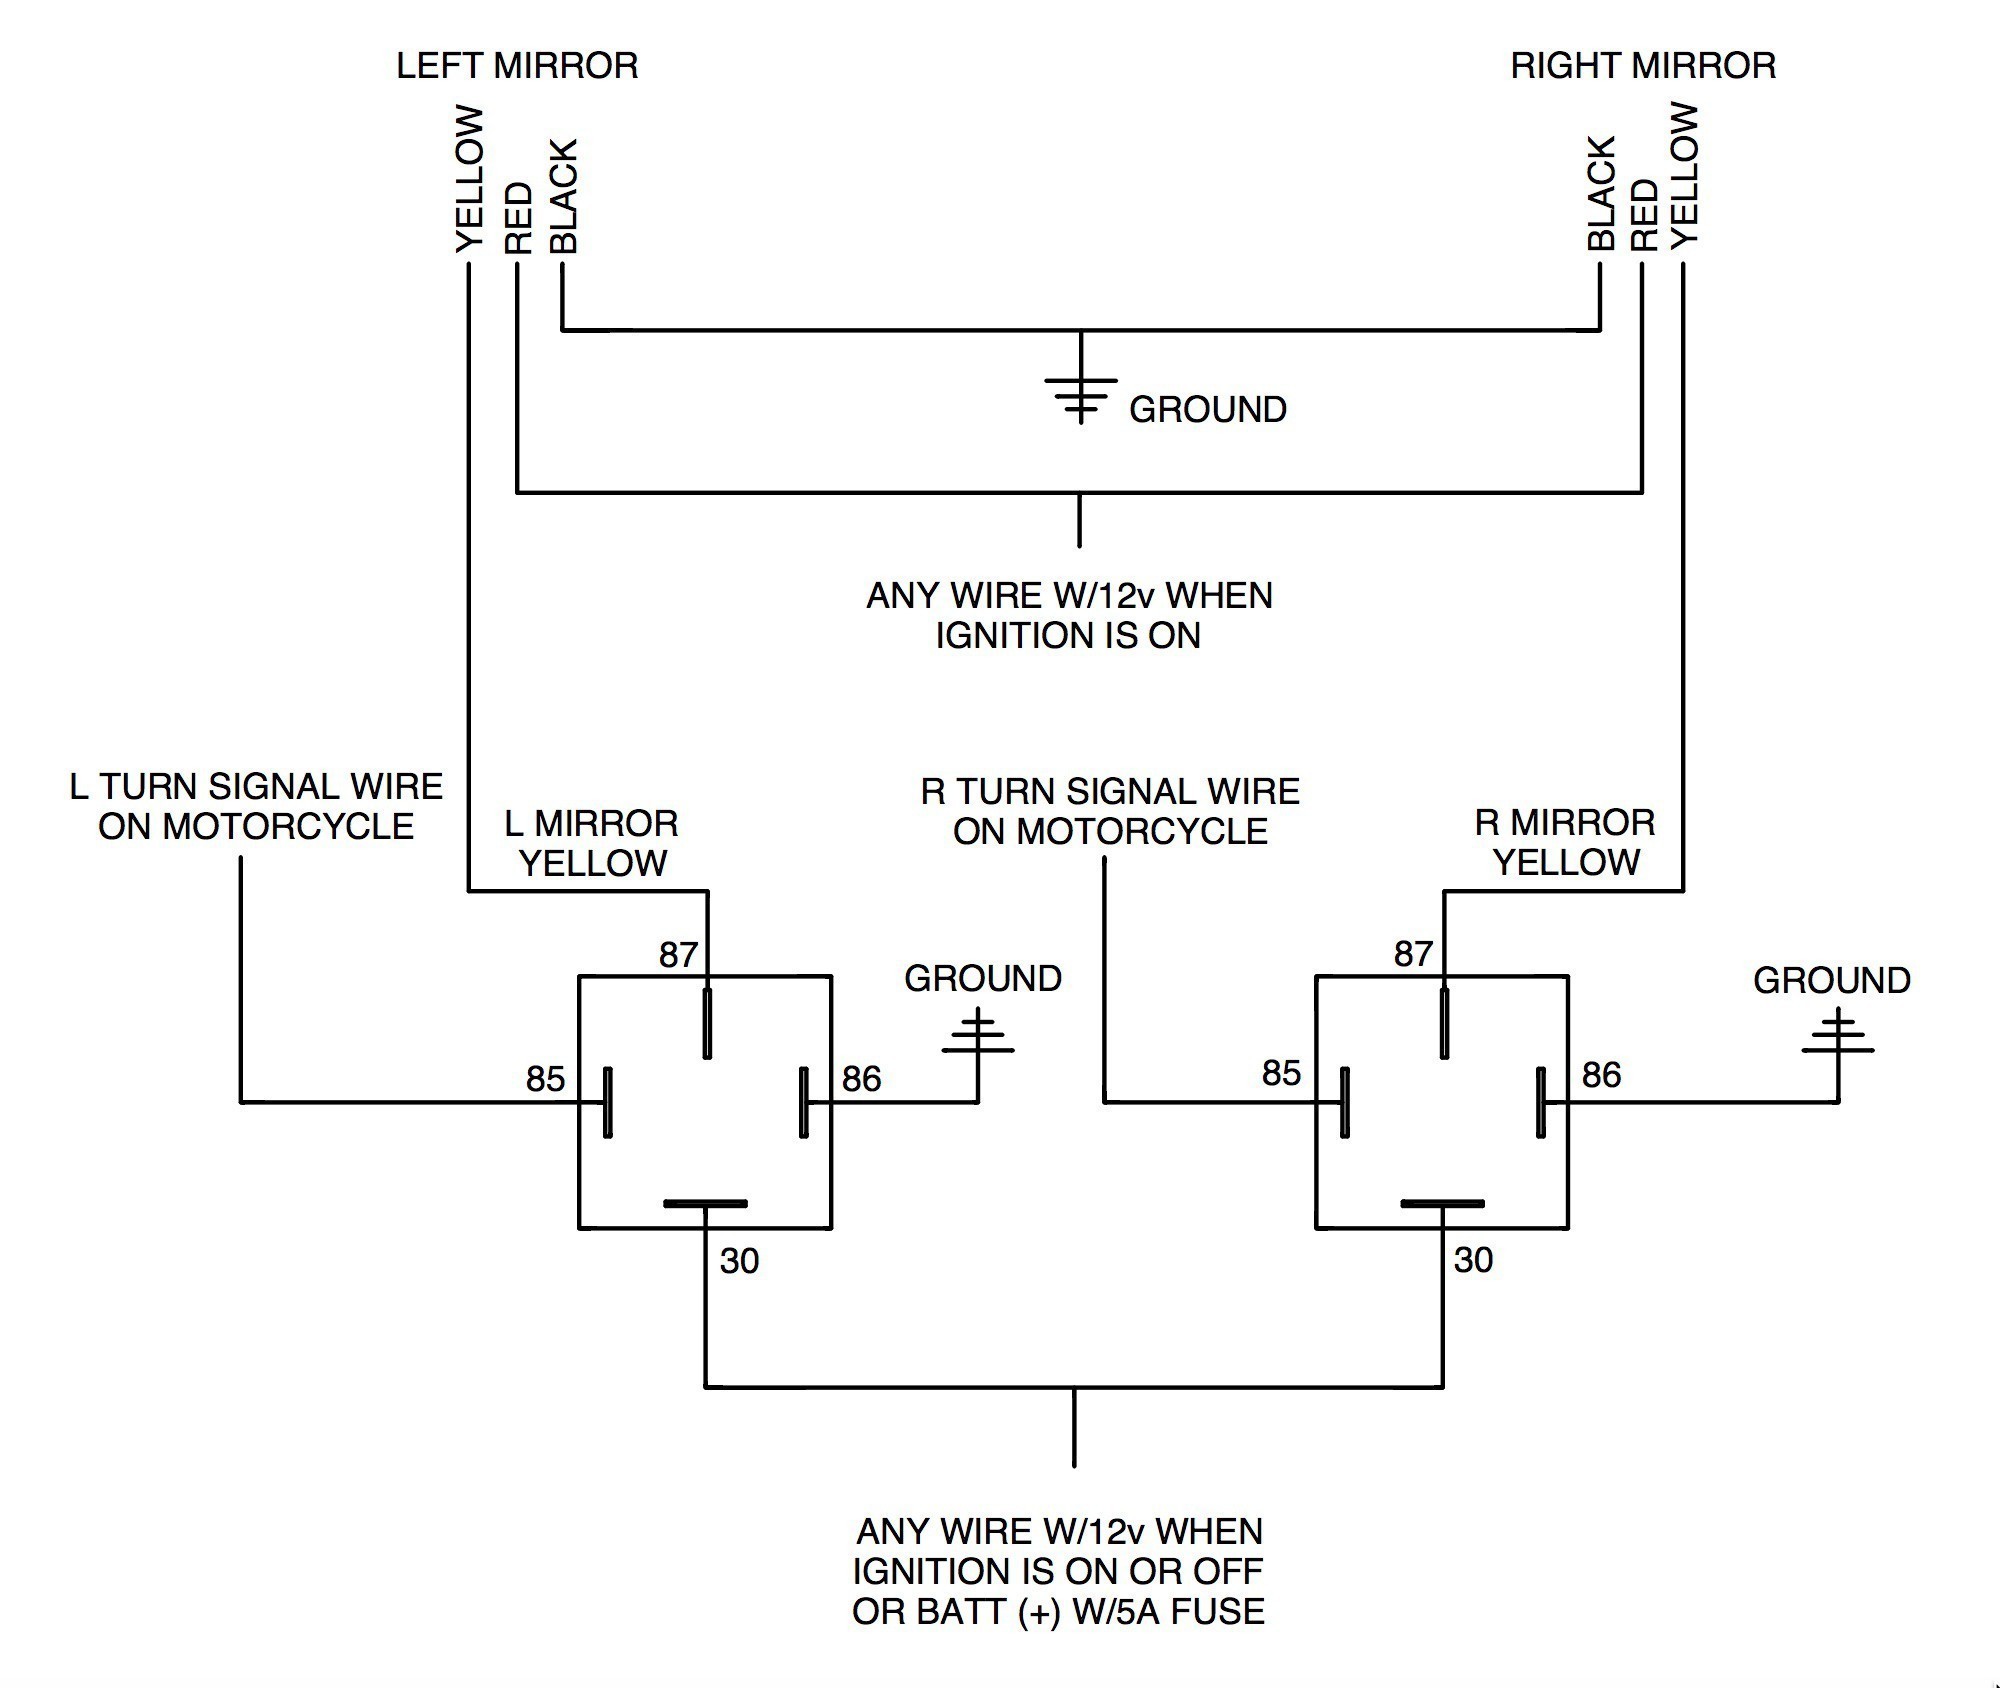 Turn Signal Wiring Diagram Motorcycle Harley Davidson Ignition Switch Diagram Free Download Wiring Diagram